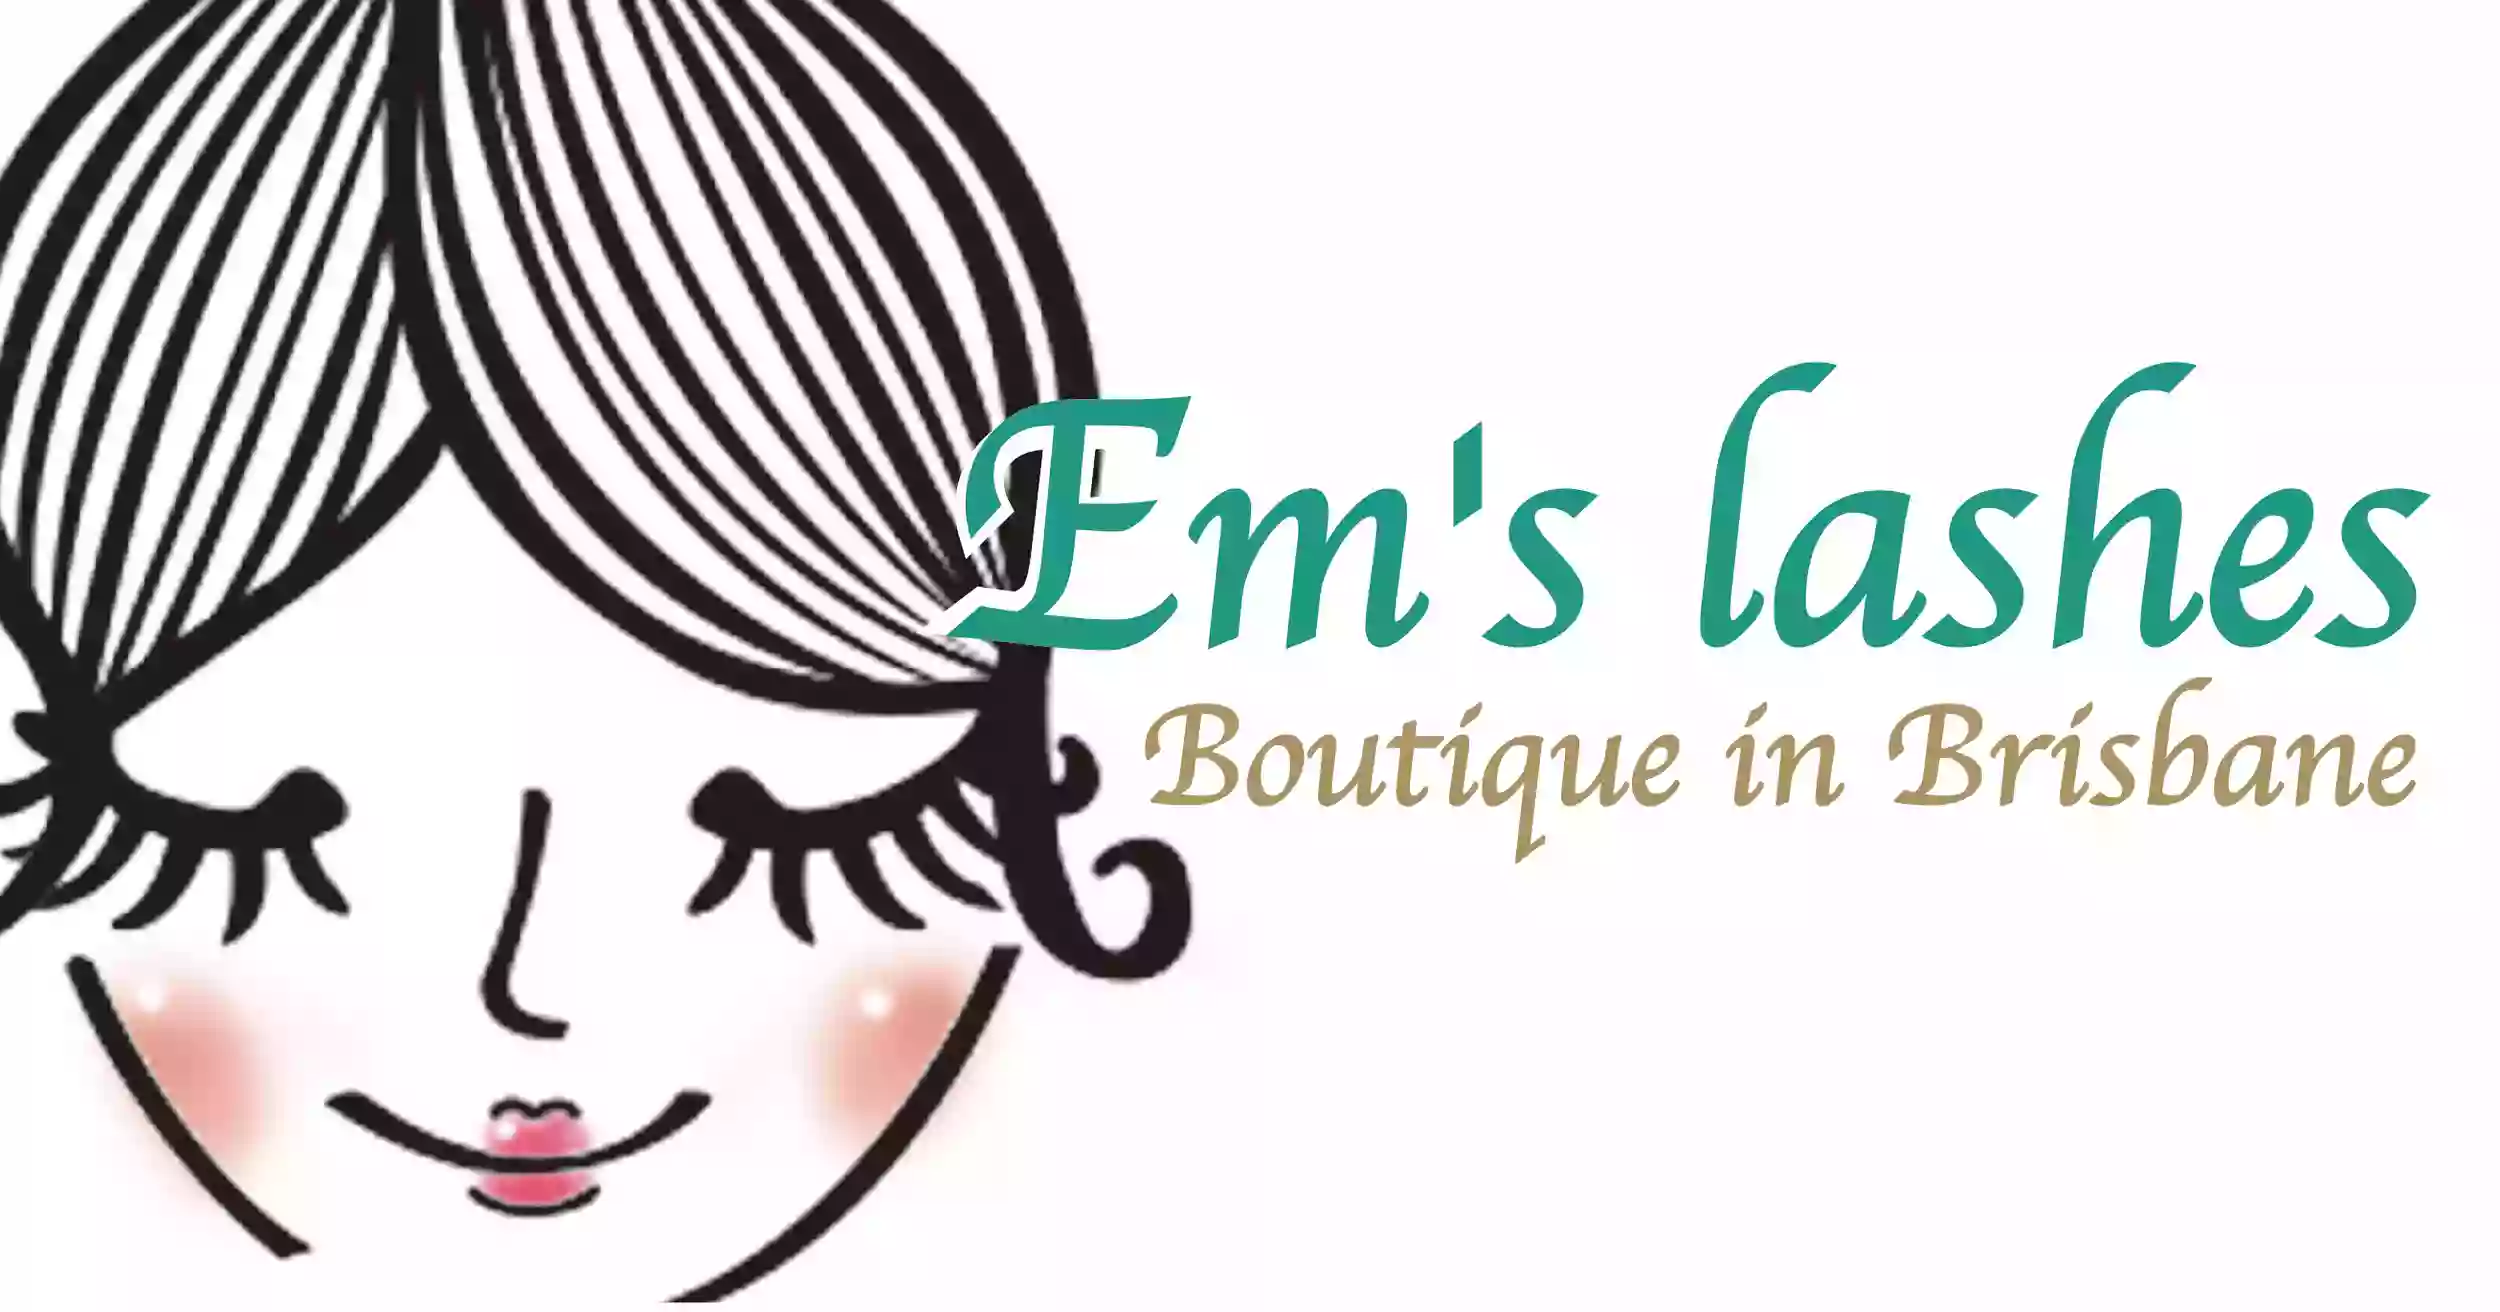 Em's lashes boutique & massage In Brisbane